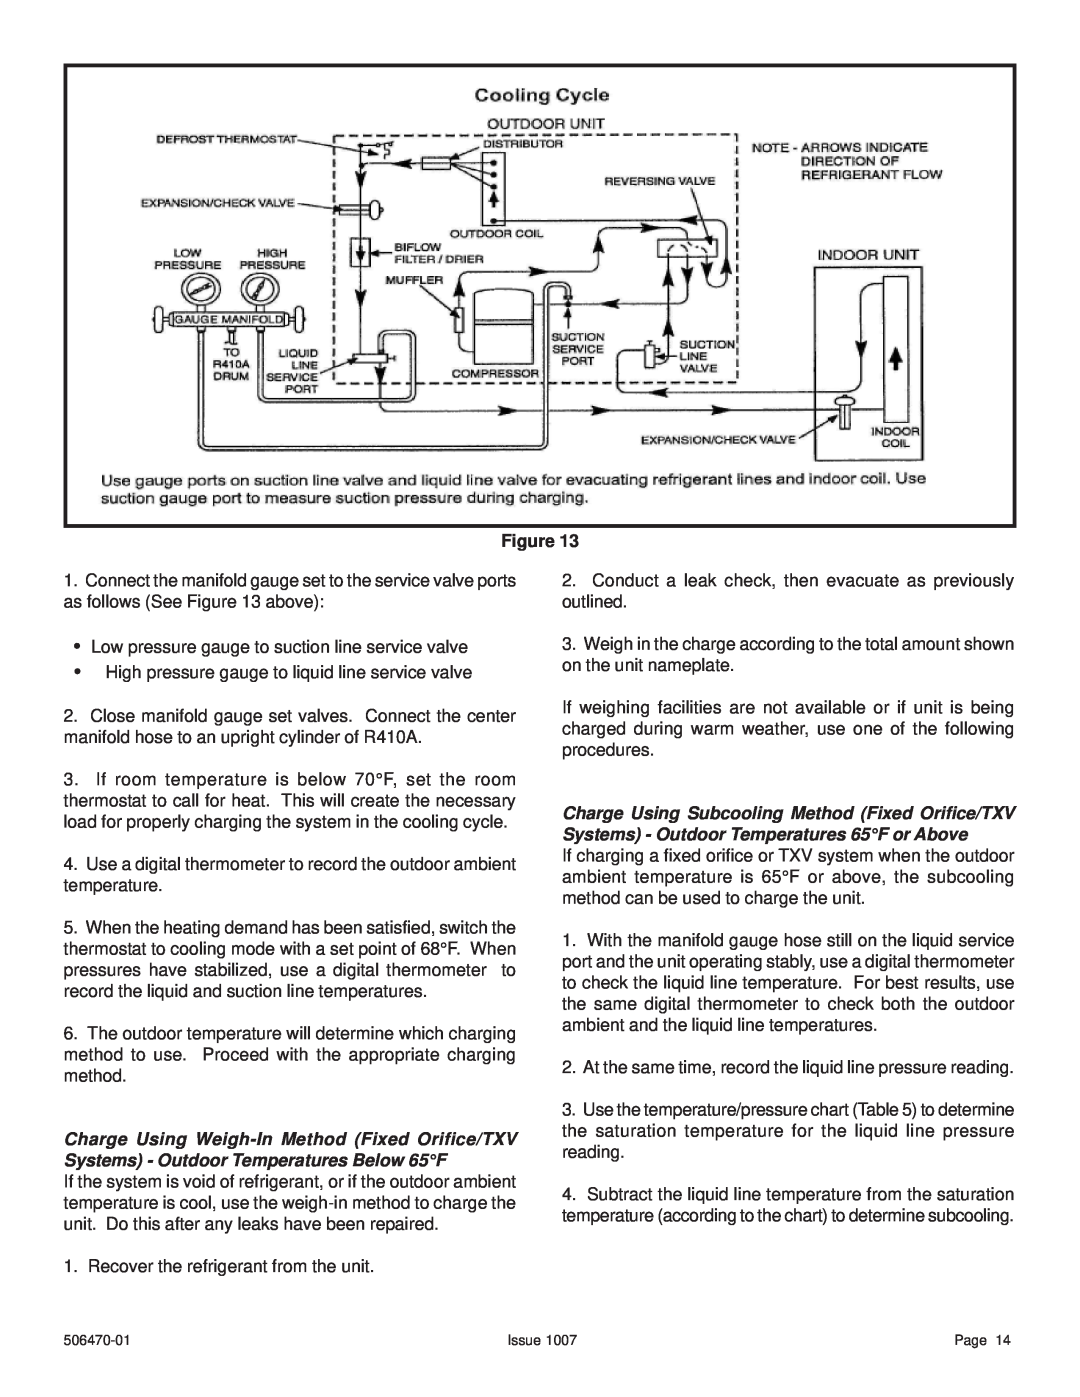 Lennox International Inc 4HP18LT manual Low pressure gauge to suction line service valve 